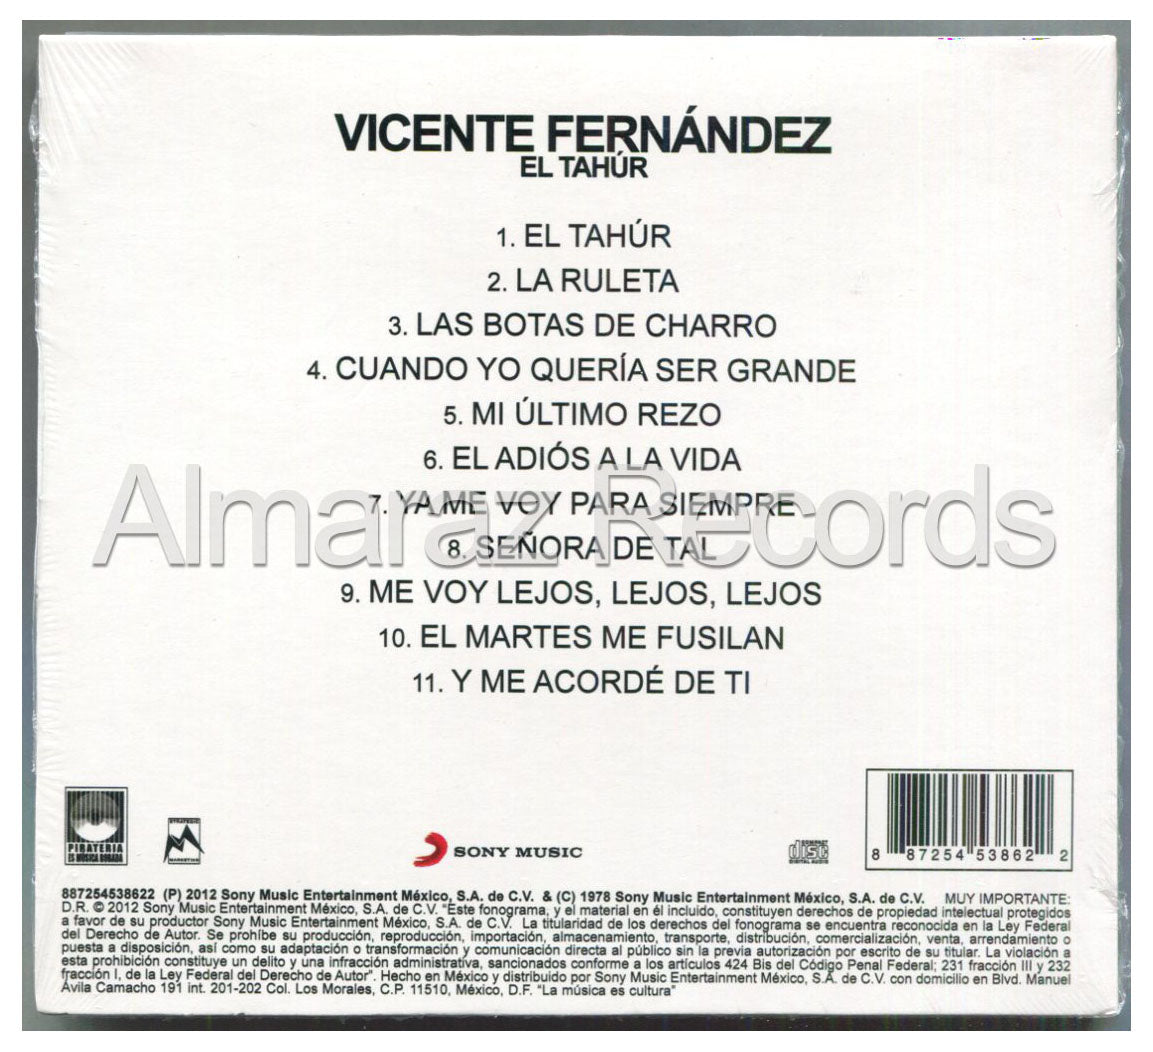 Vicente Fernandez El Tahur CD